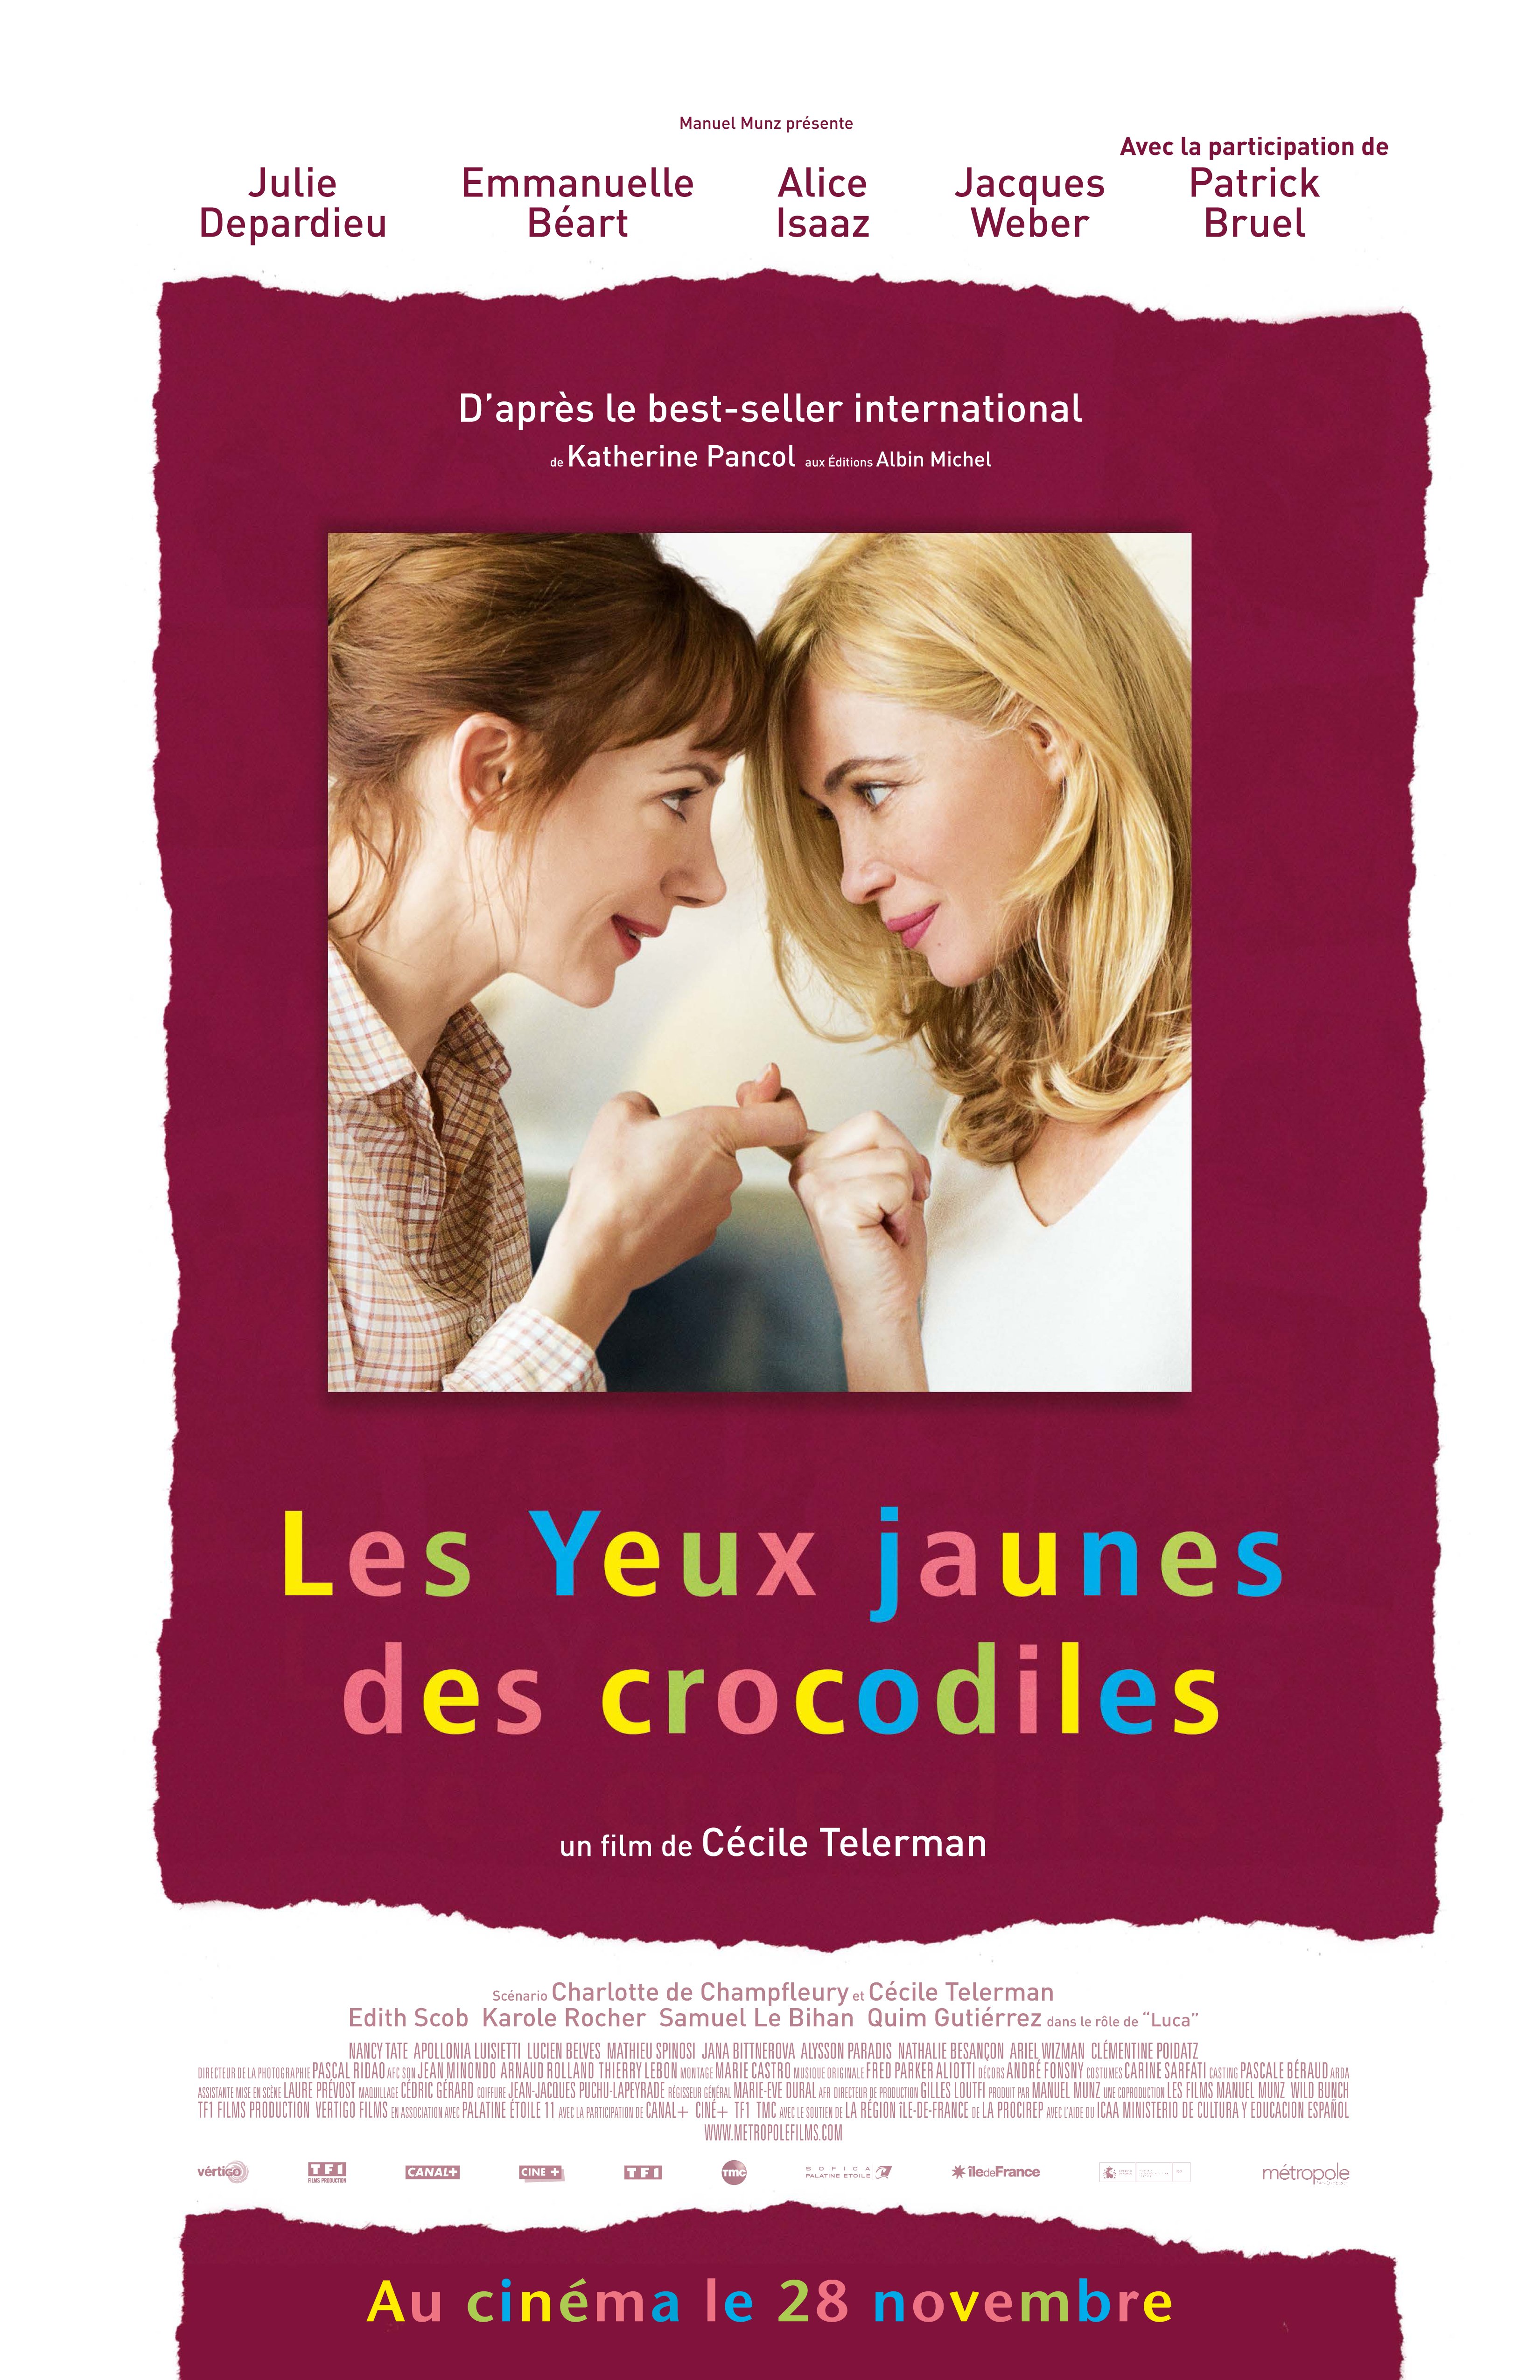 Poster of the movie Les Yeux jaunes des crocodiles